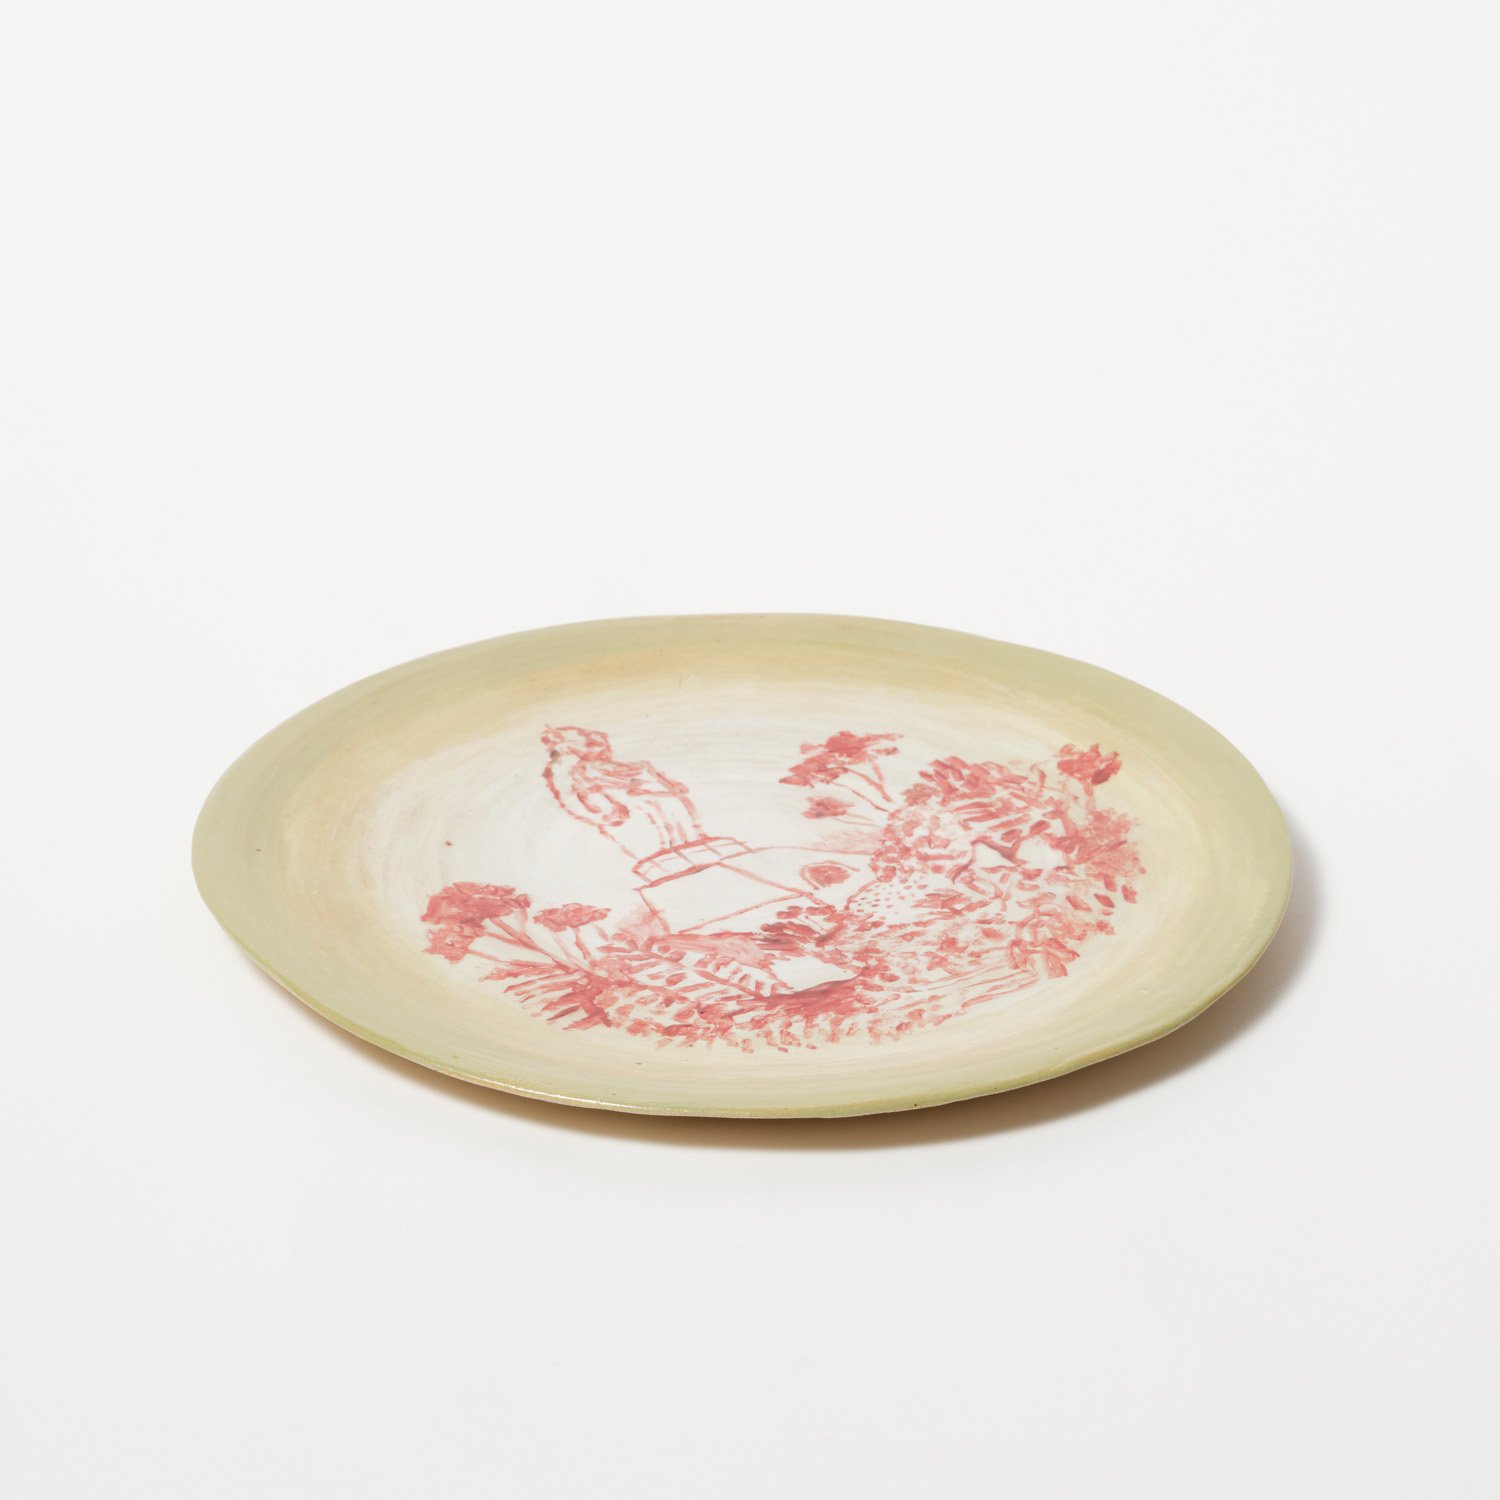 San Sebastian on the hill, Spain – Ceramic Plate – 25cm x 25cm - $450